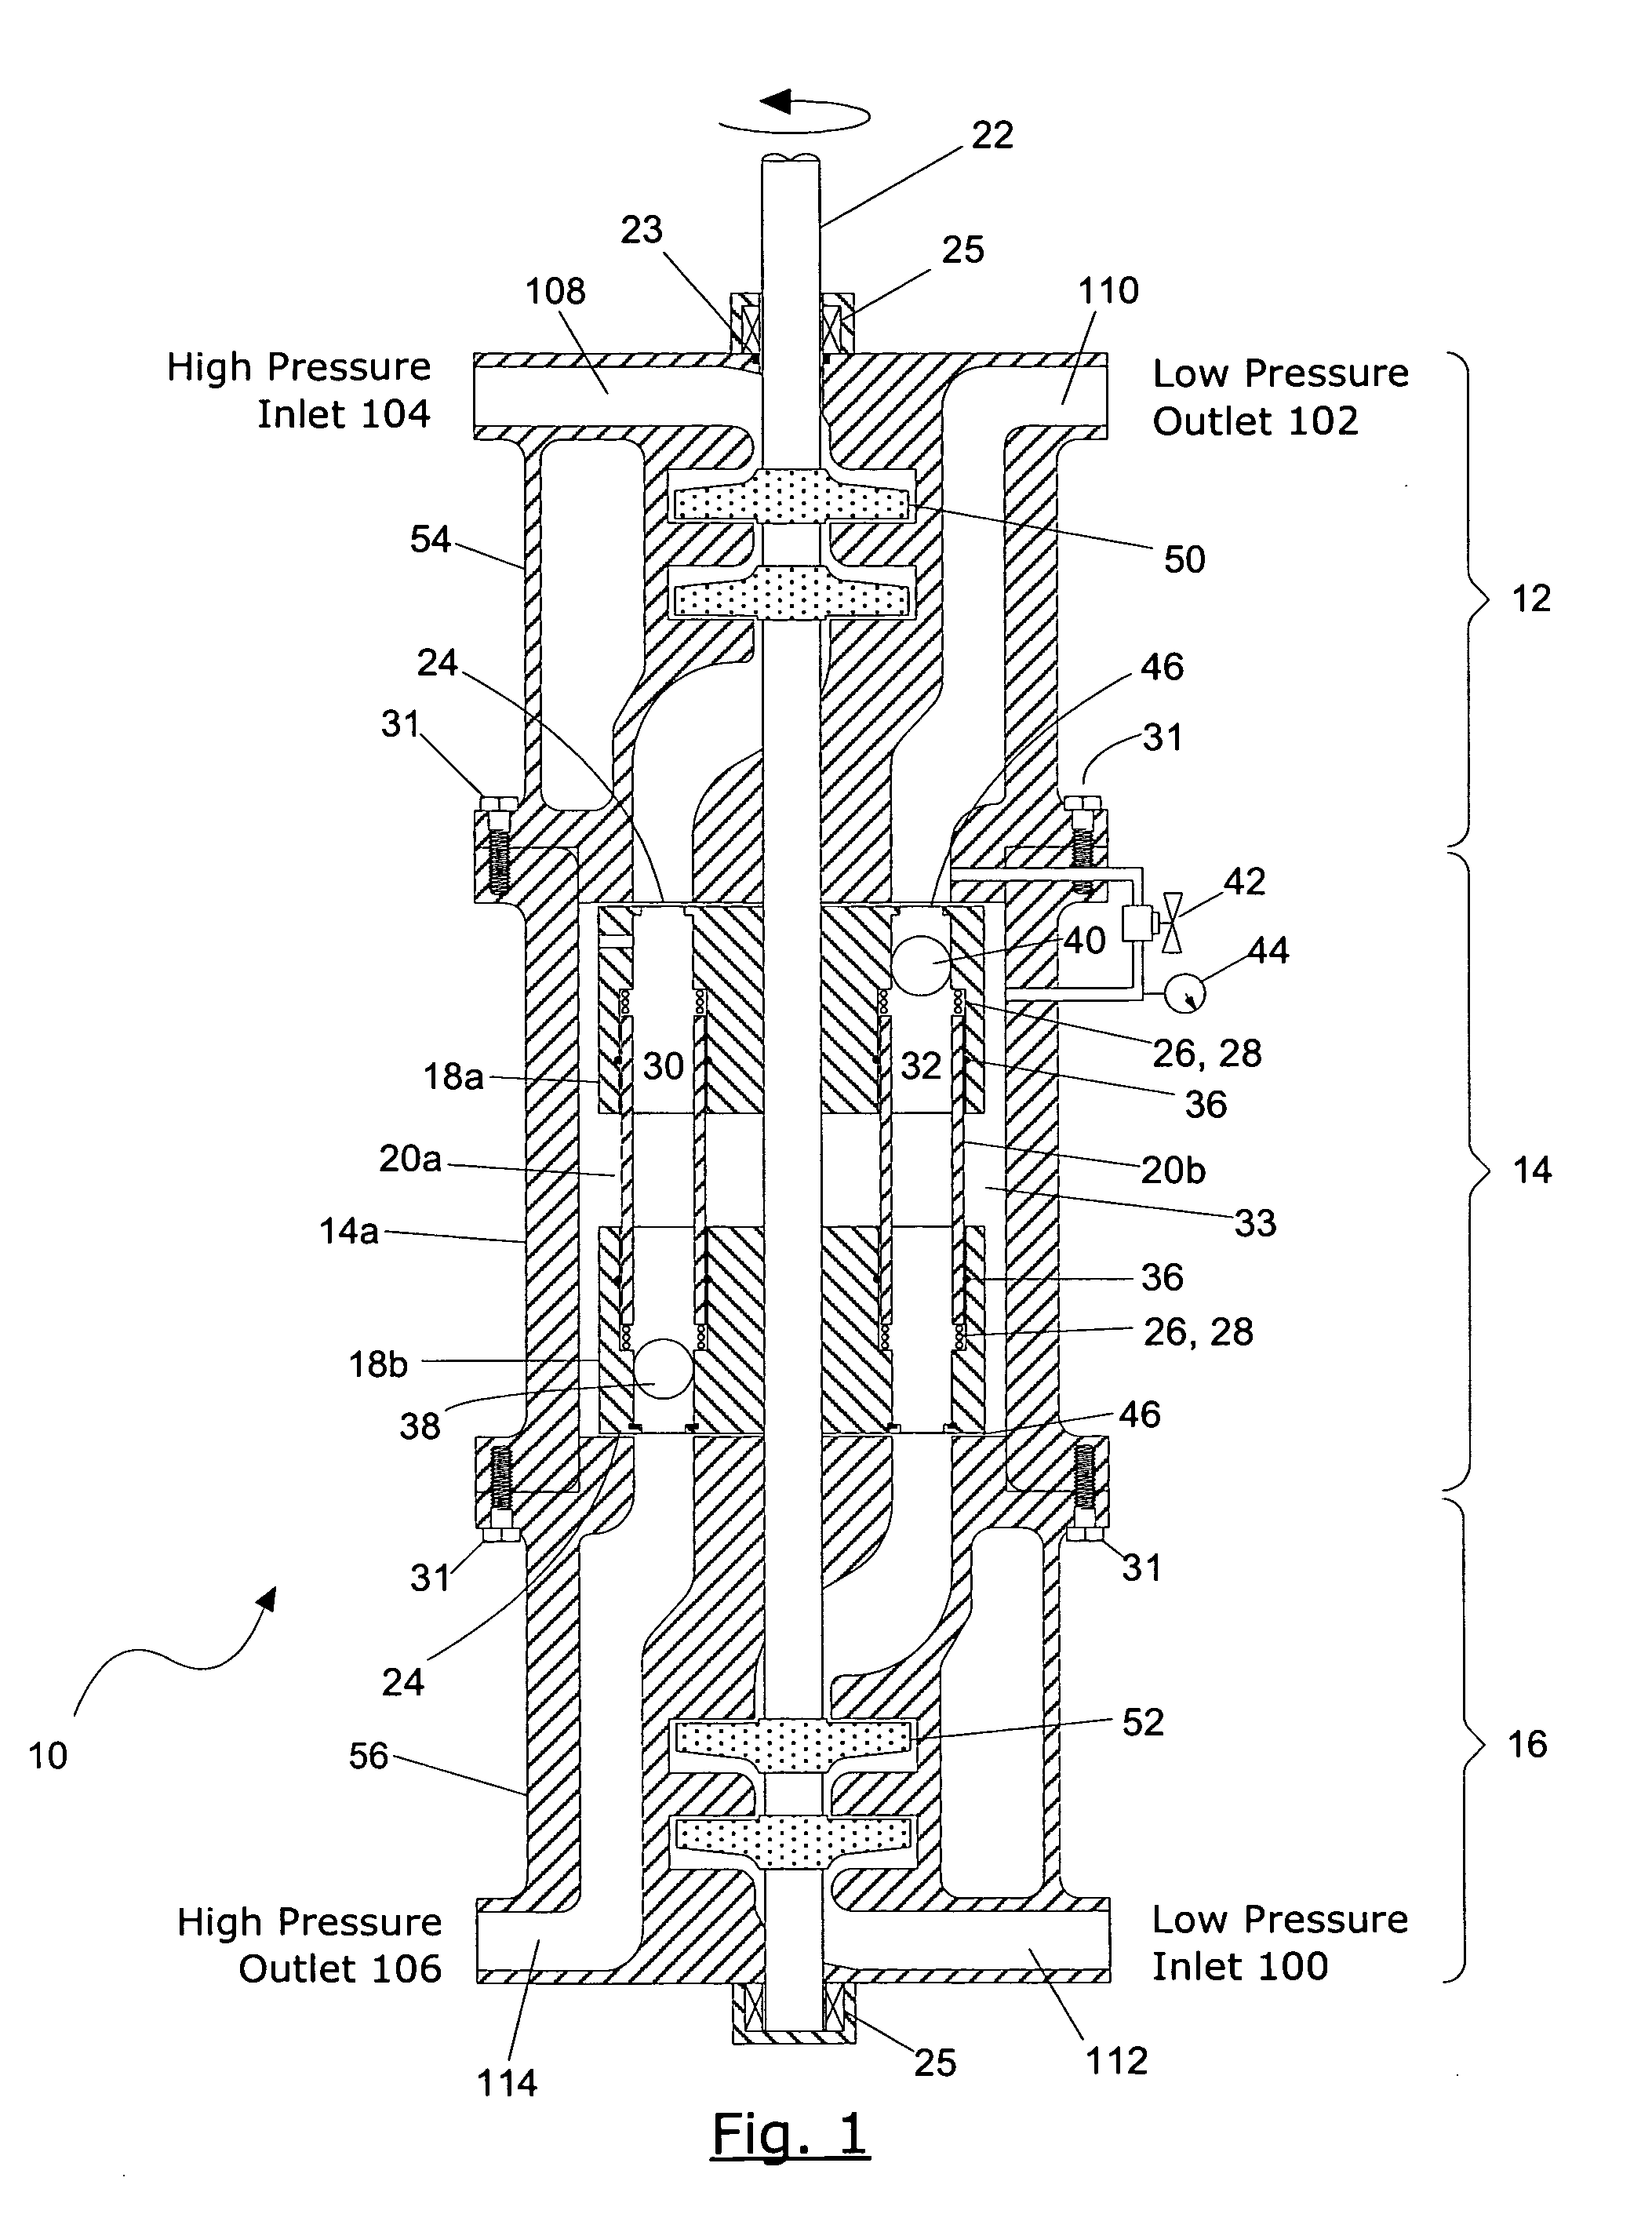 Pressure exchange apparatus with integral pump